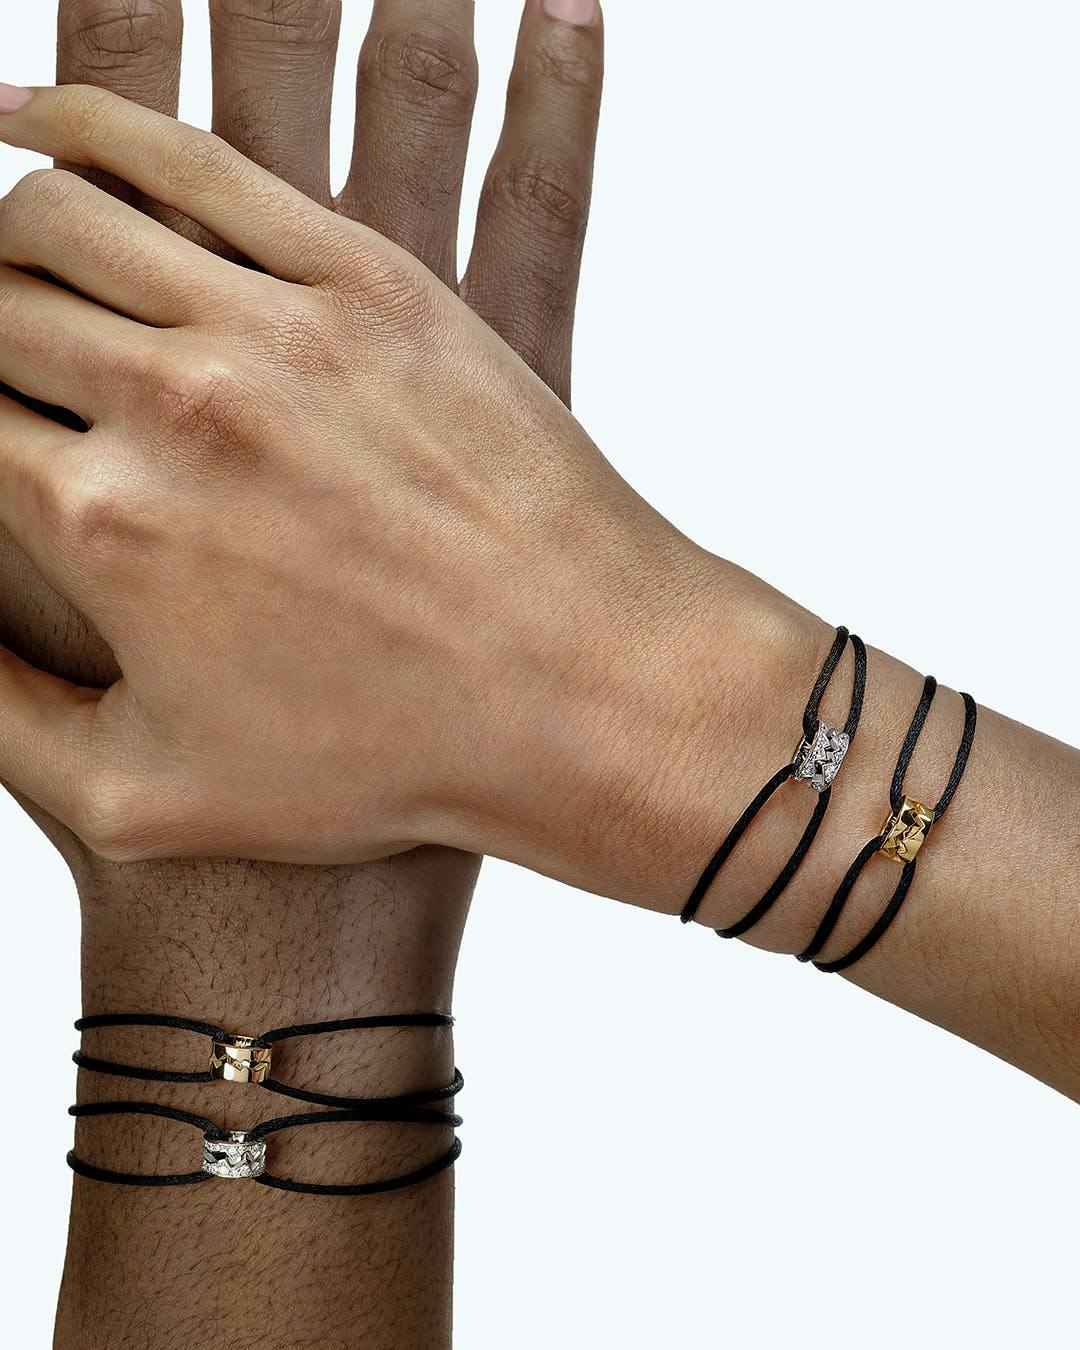 body part hand person wrist accessories bracelet jewelry finger